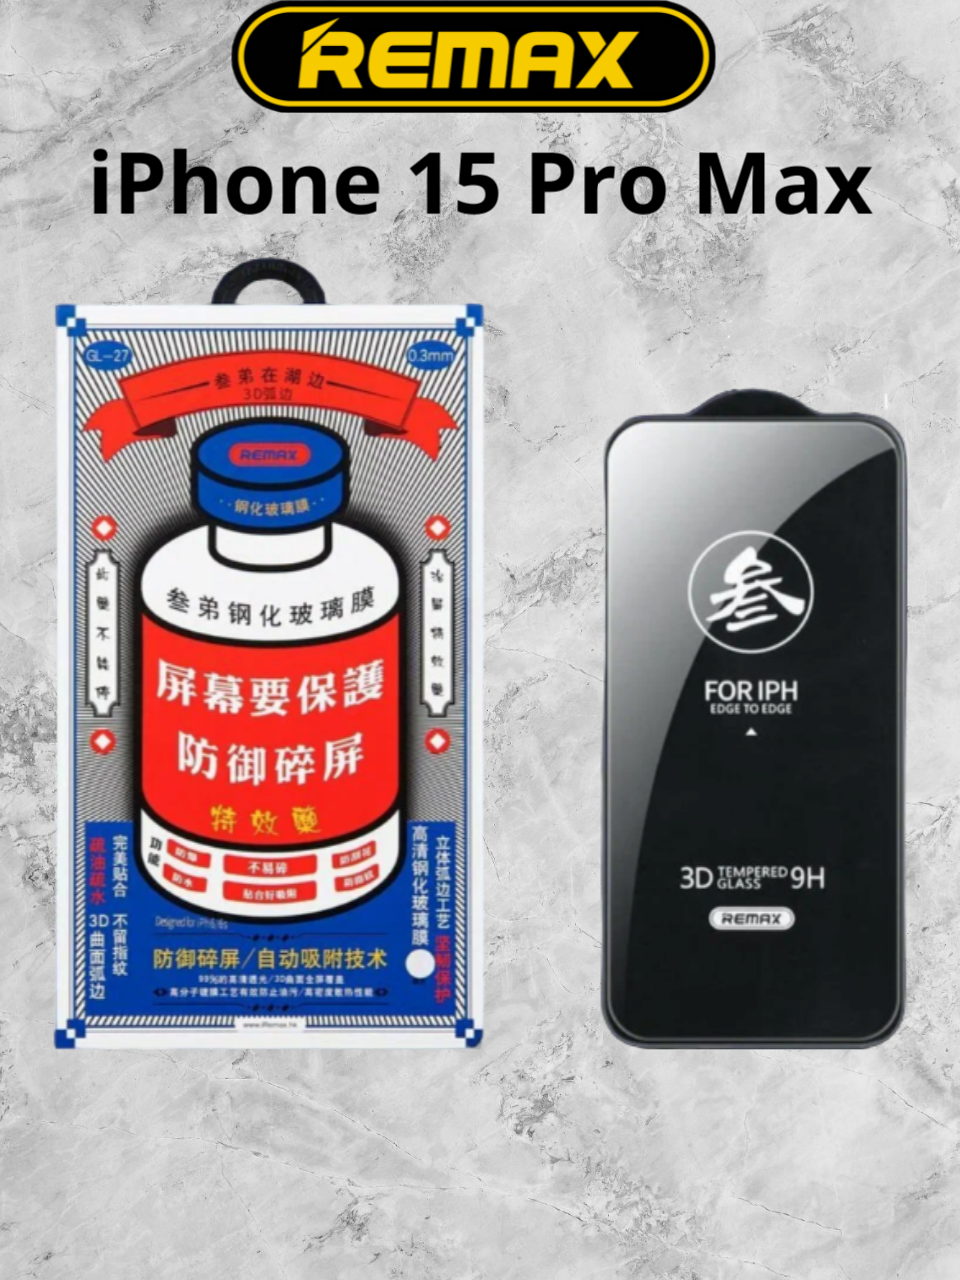 Защитное стекло Remax GL-27 для iPhone 15 pro max